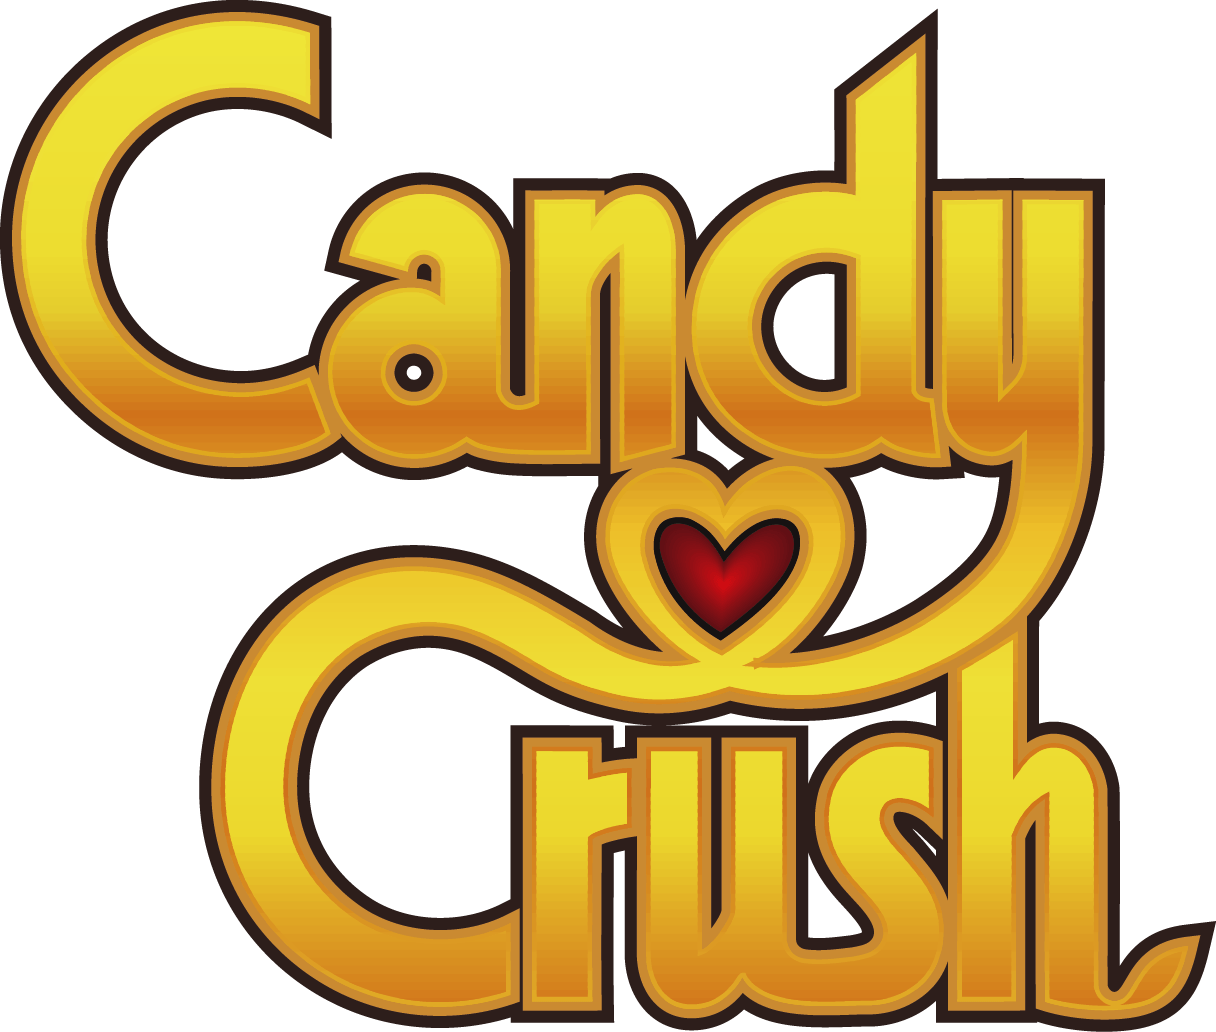 Candy Crush Logo